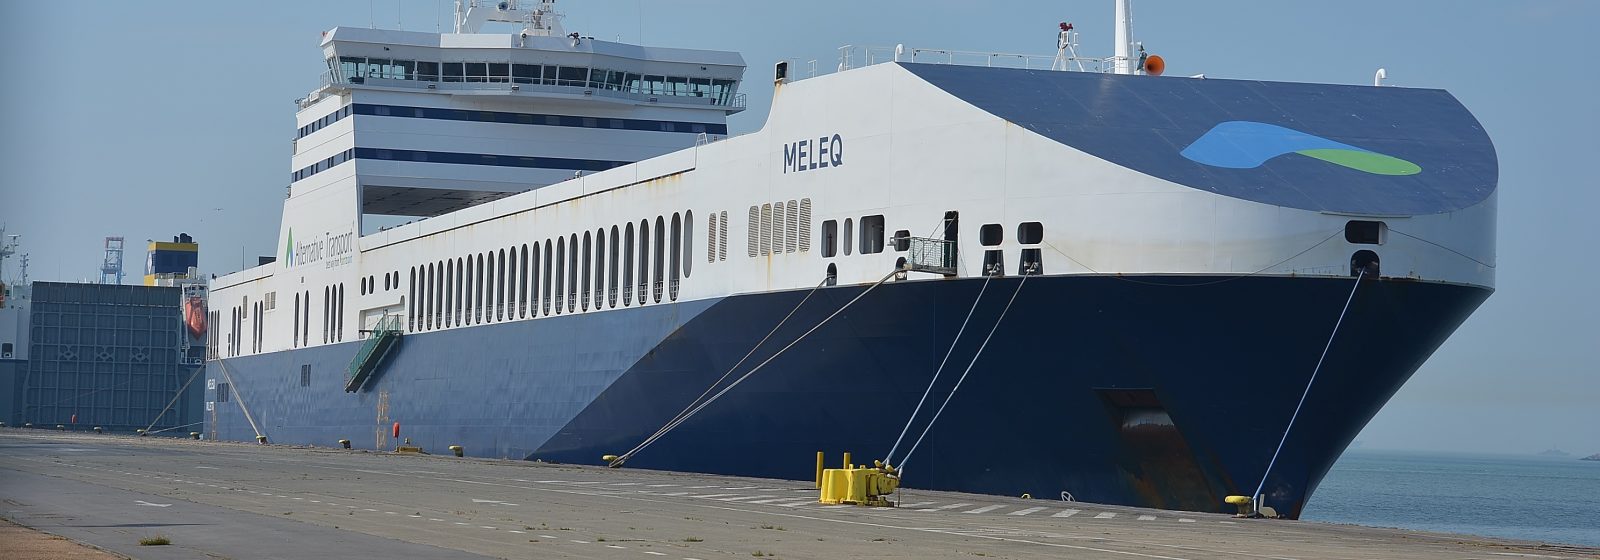 Roro-carrier 'Meleq'